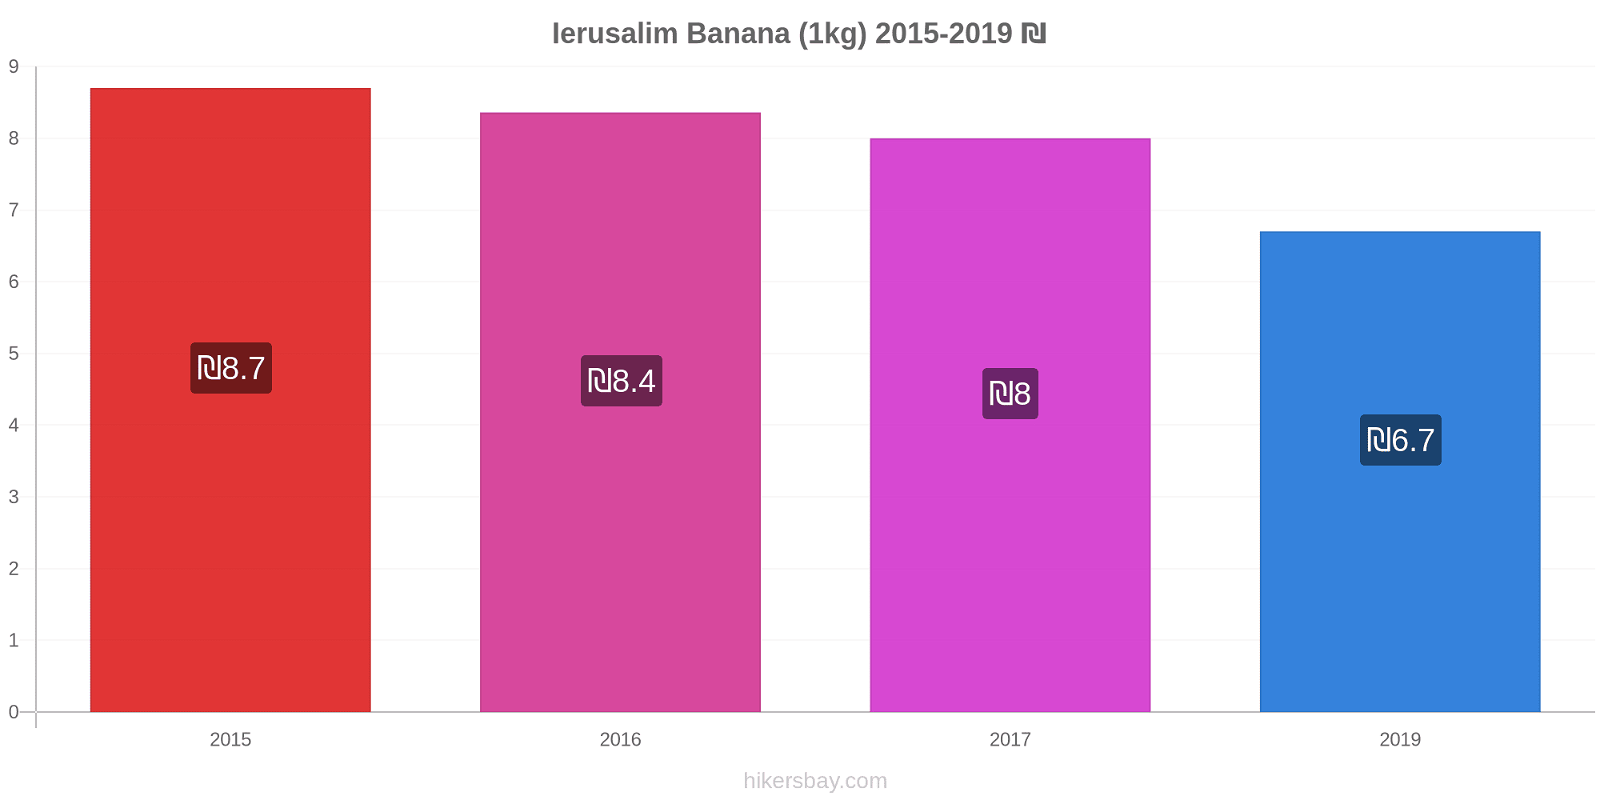 Ierusalim modificări de preț Banana (1kg) hikersbay.com